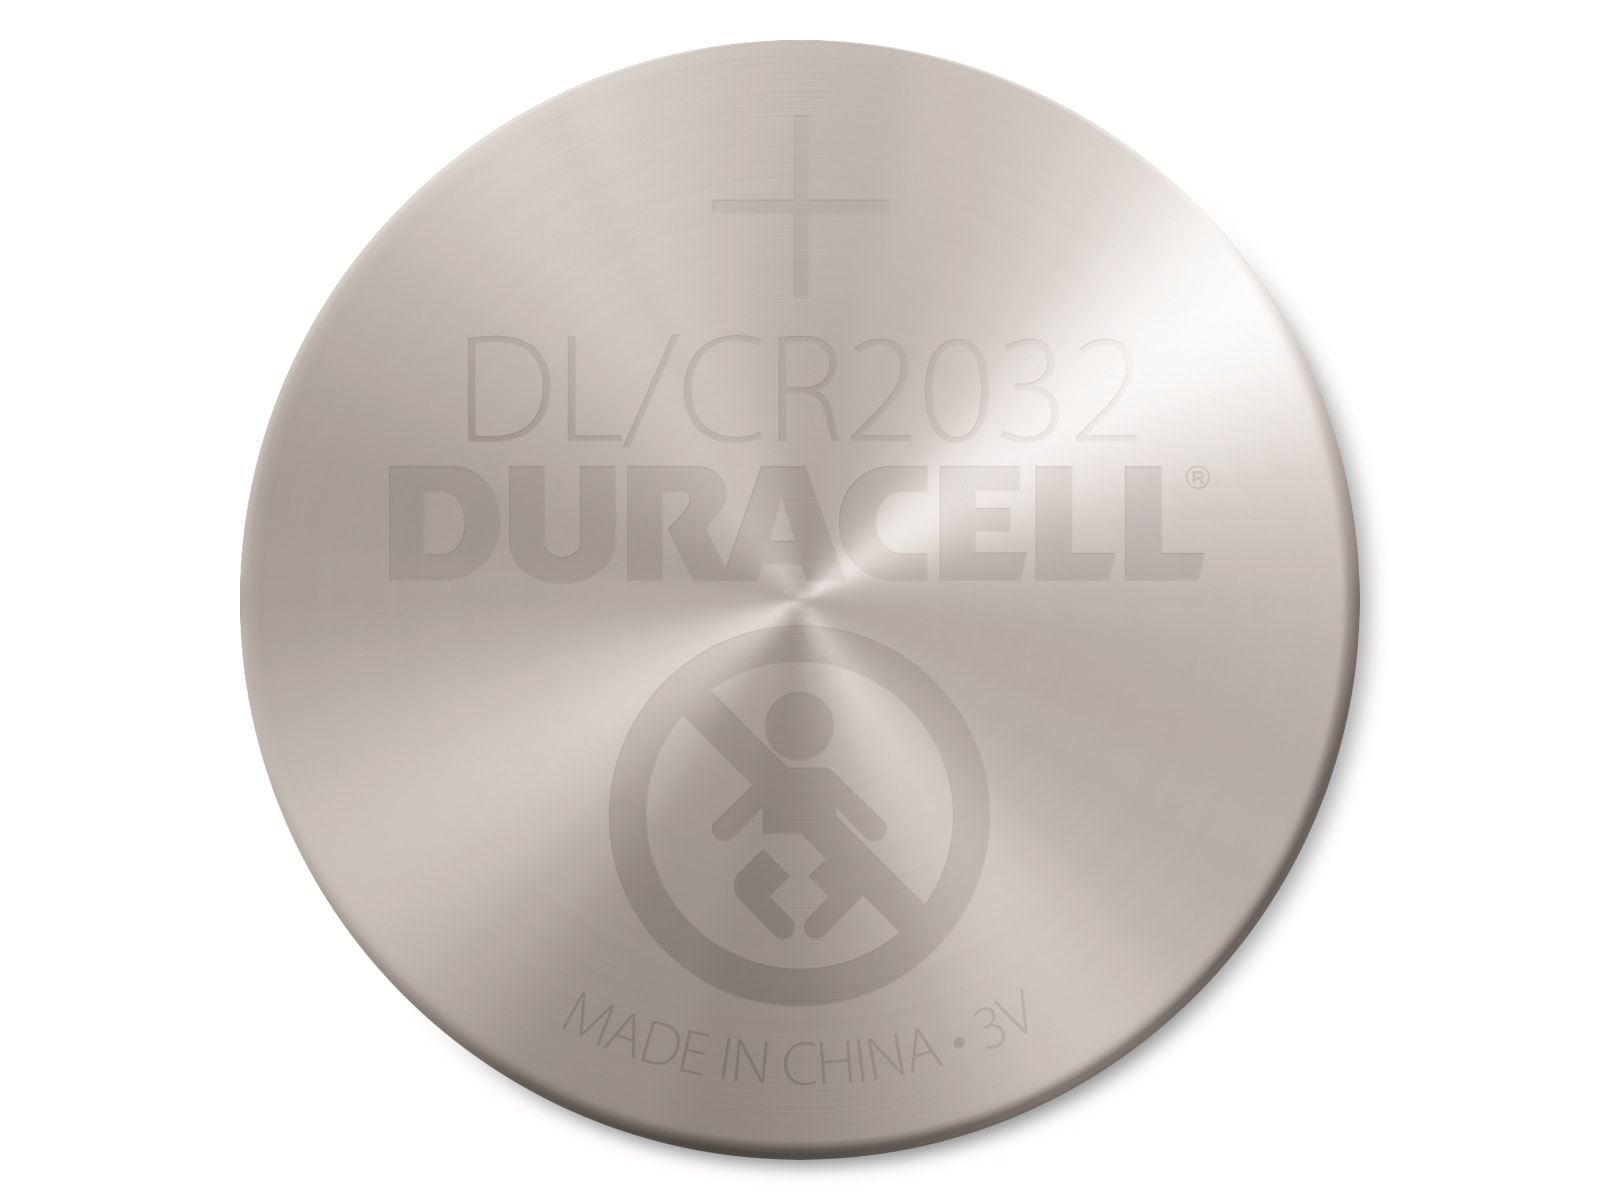 DURACELL Lithium-Knopfzelle CR2032, 3V, 5 Batterien Stück Lithium